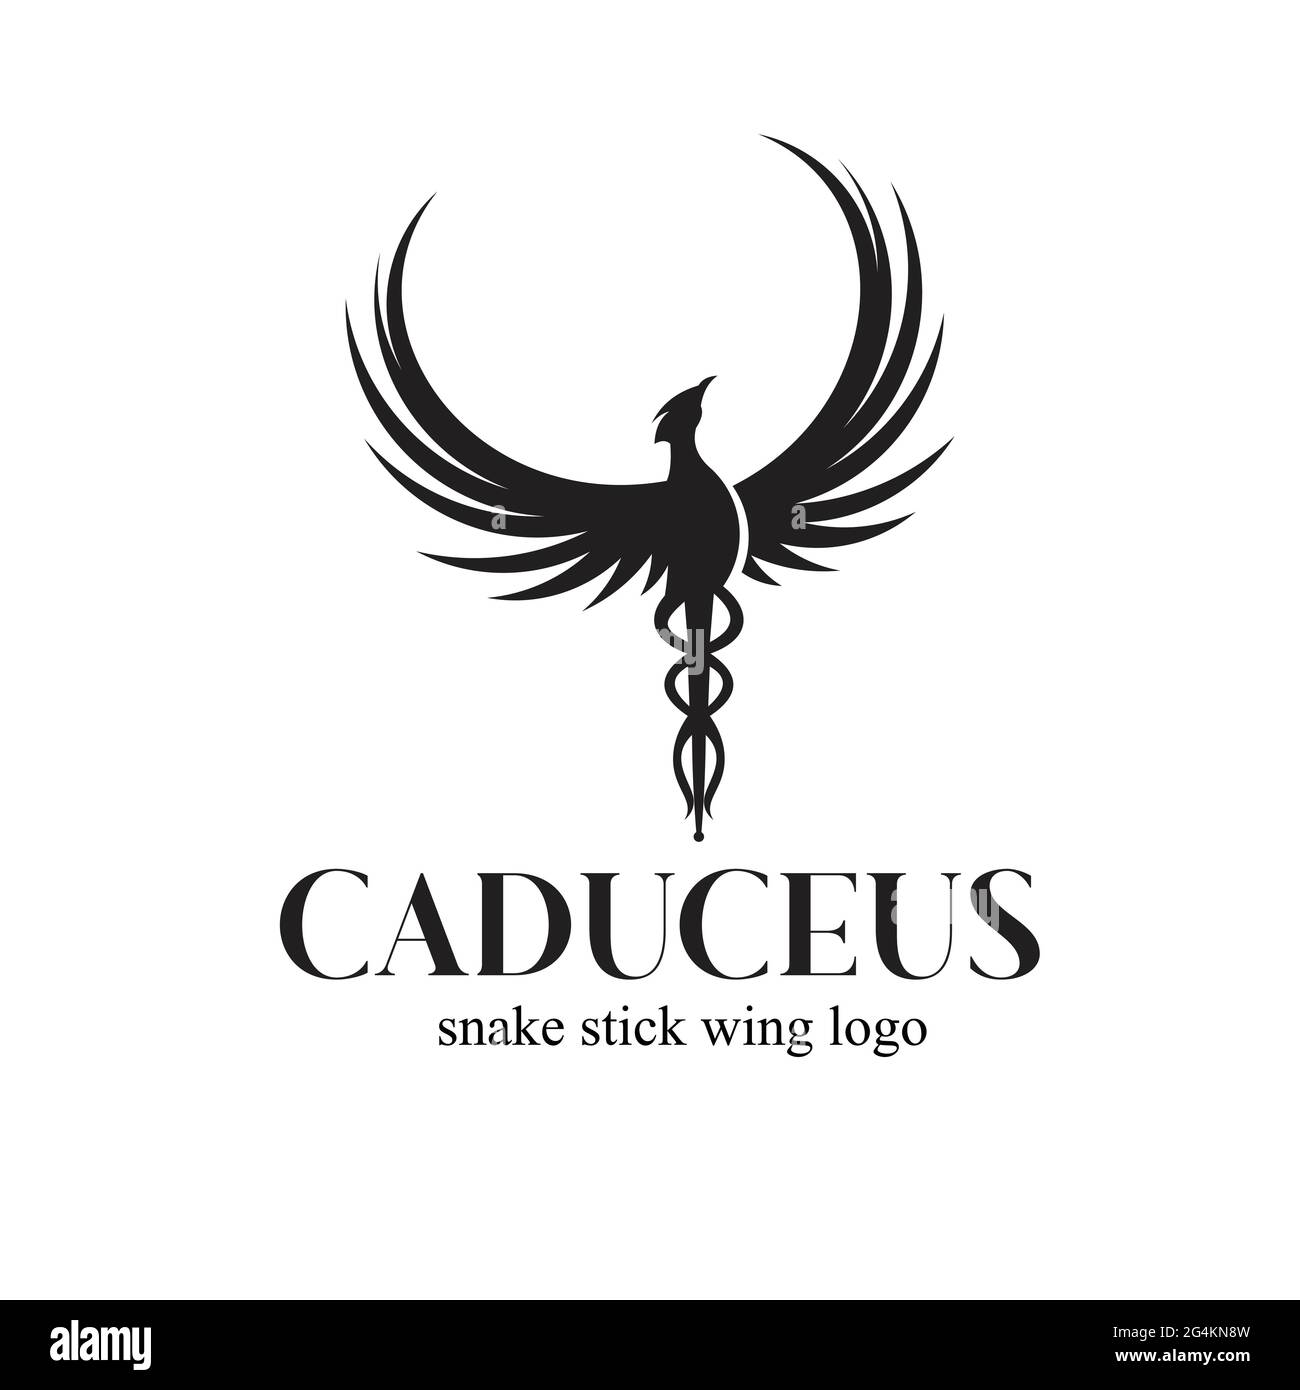 Bird Caduceus snake wings logo exclusive design inspiration Stock Vector